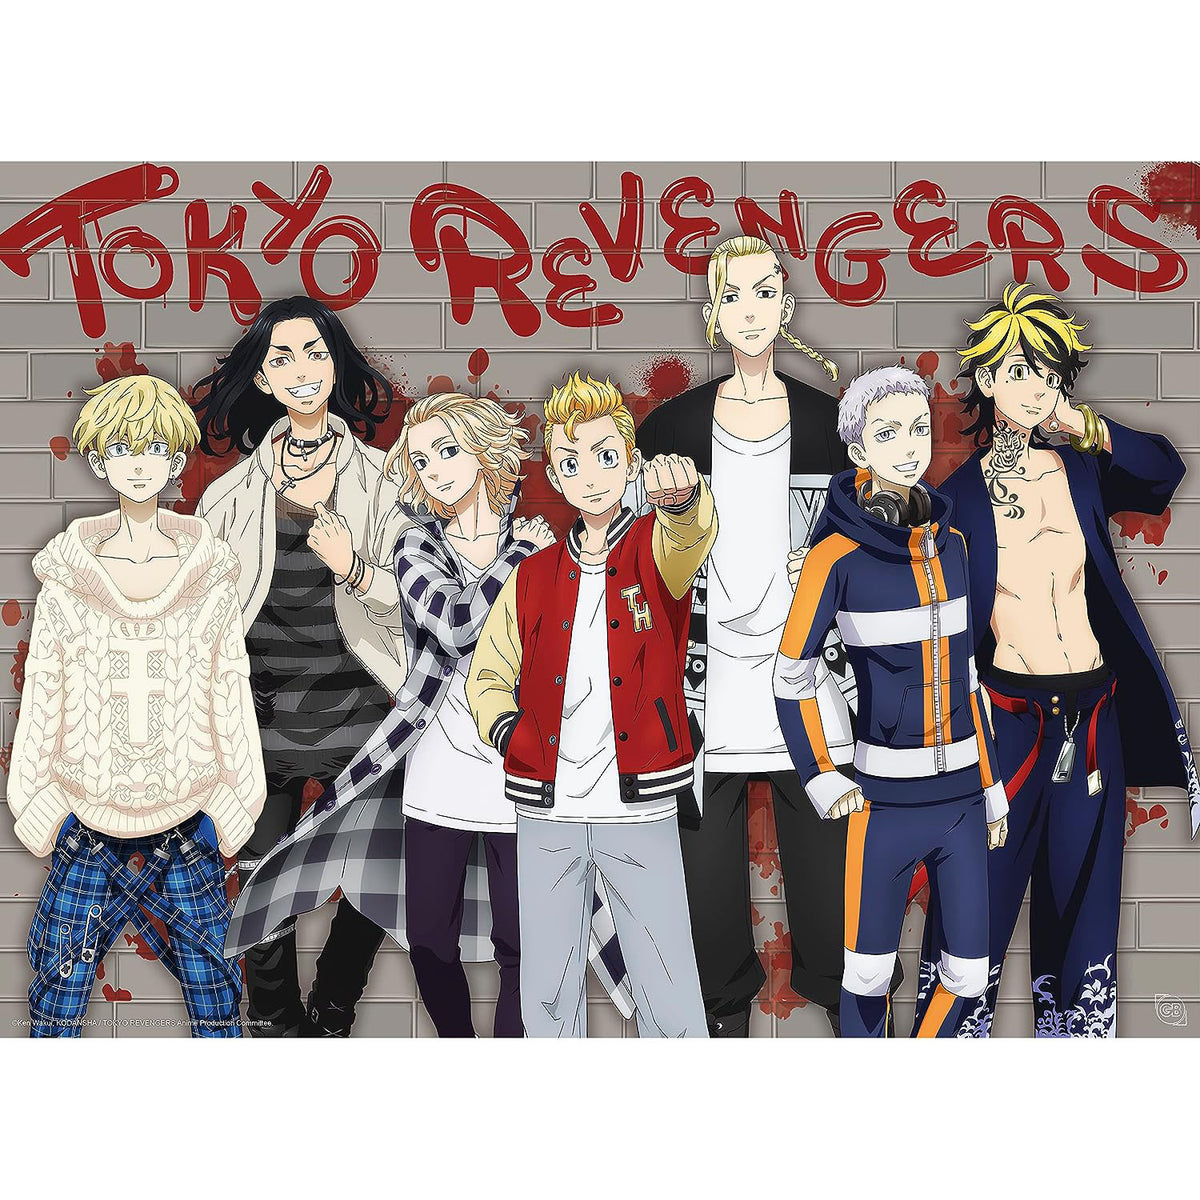 TOKYO REVENGERS - Poster - Tokyo Manji Gang Casual